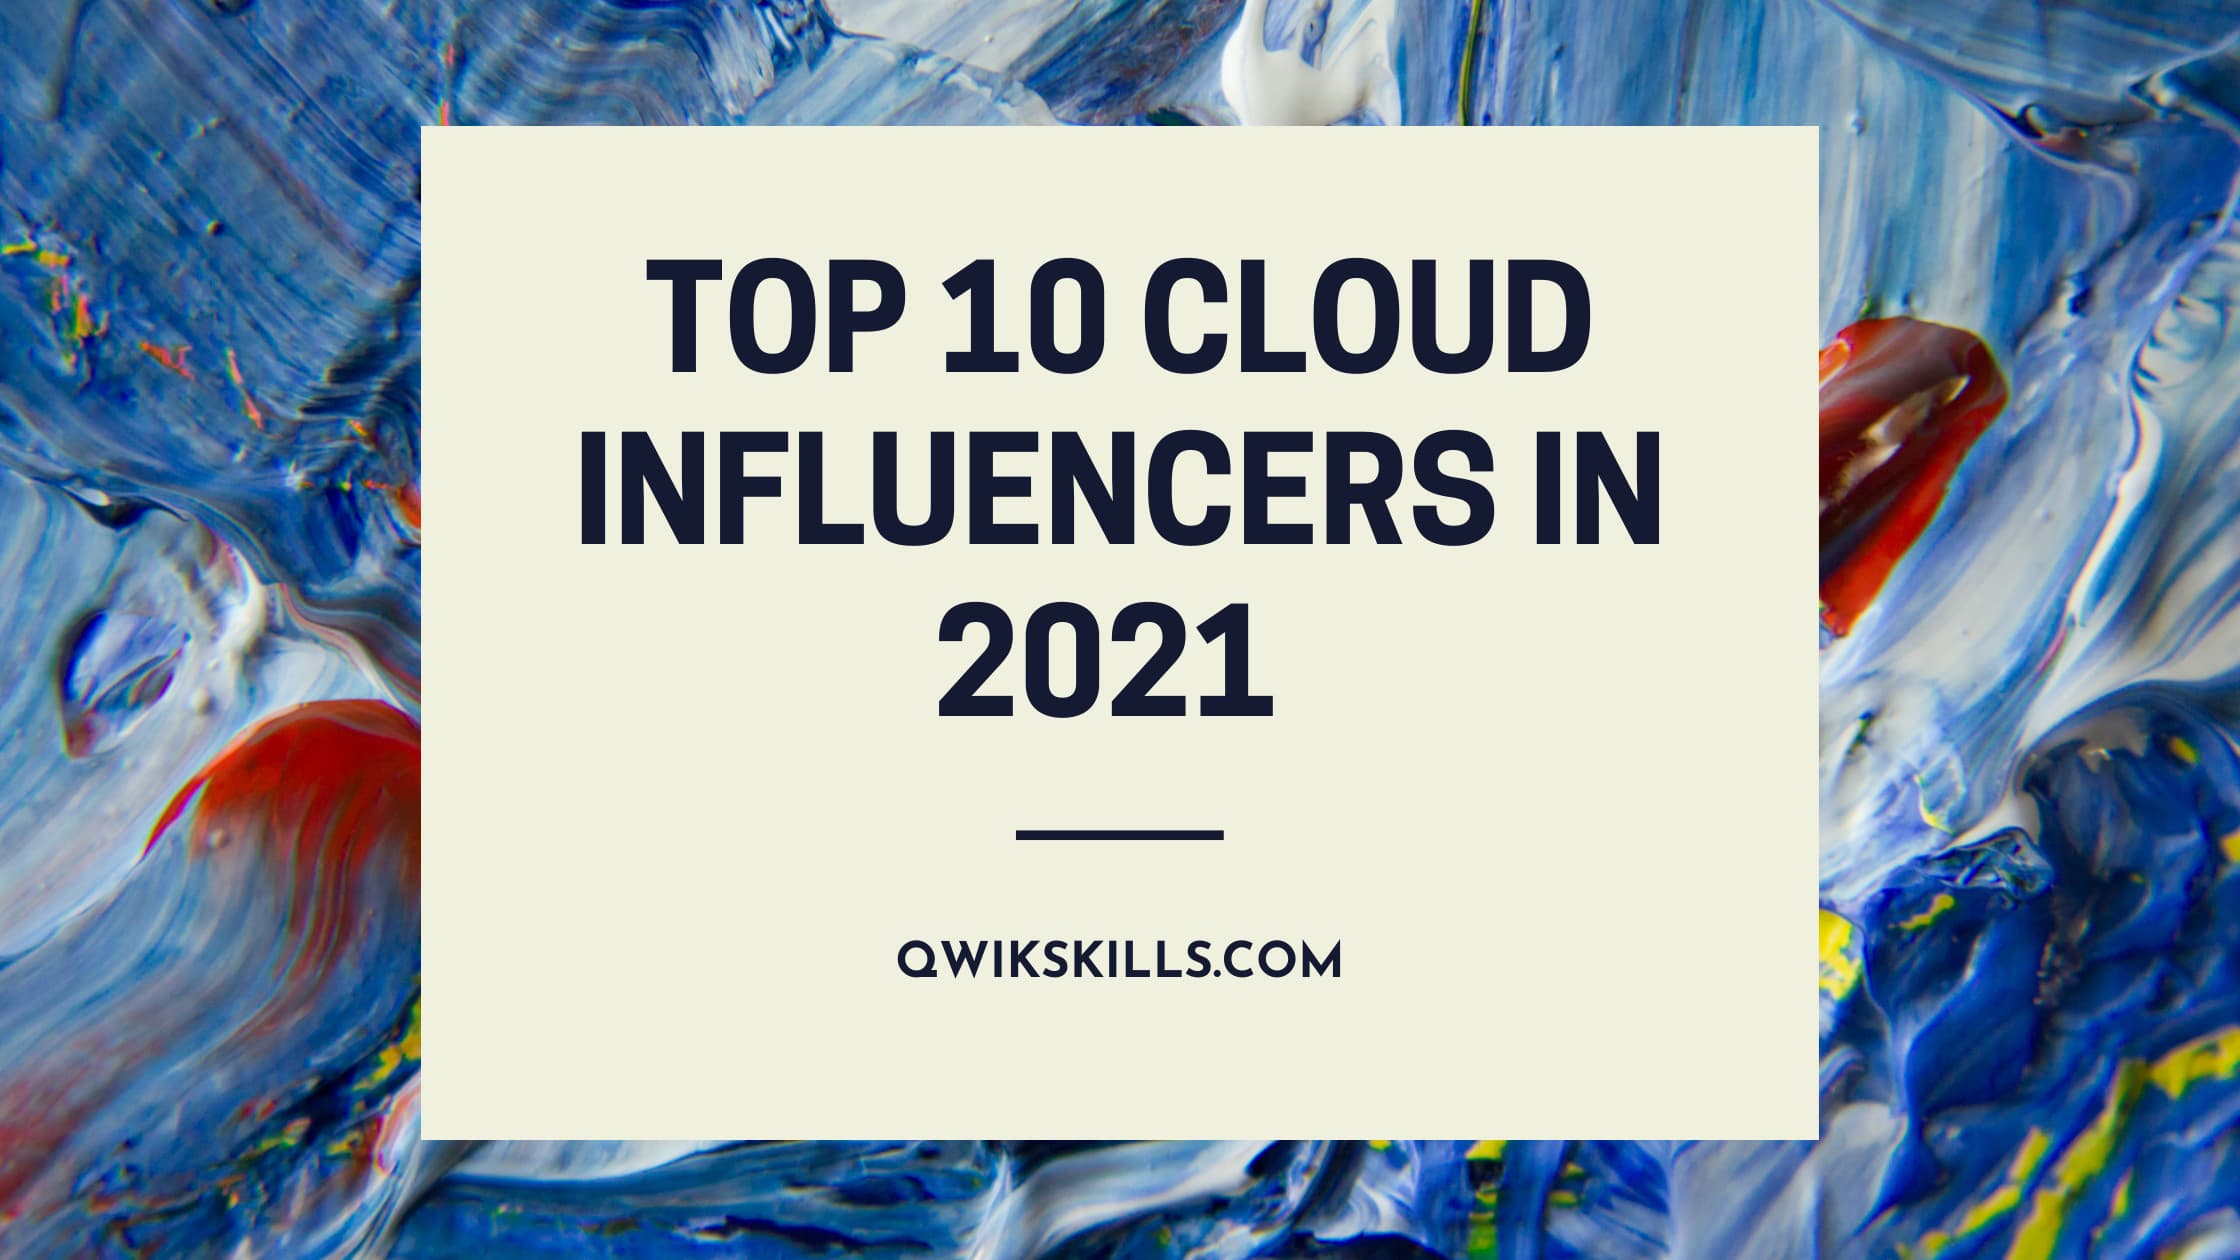 Top 10 Cloud Influencers in 2021